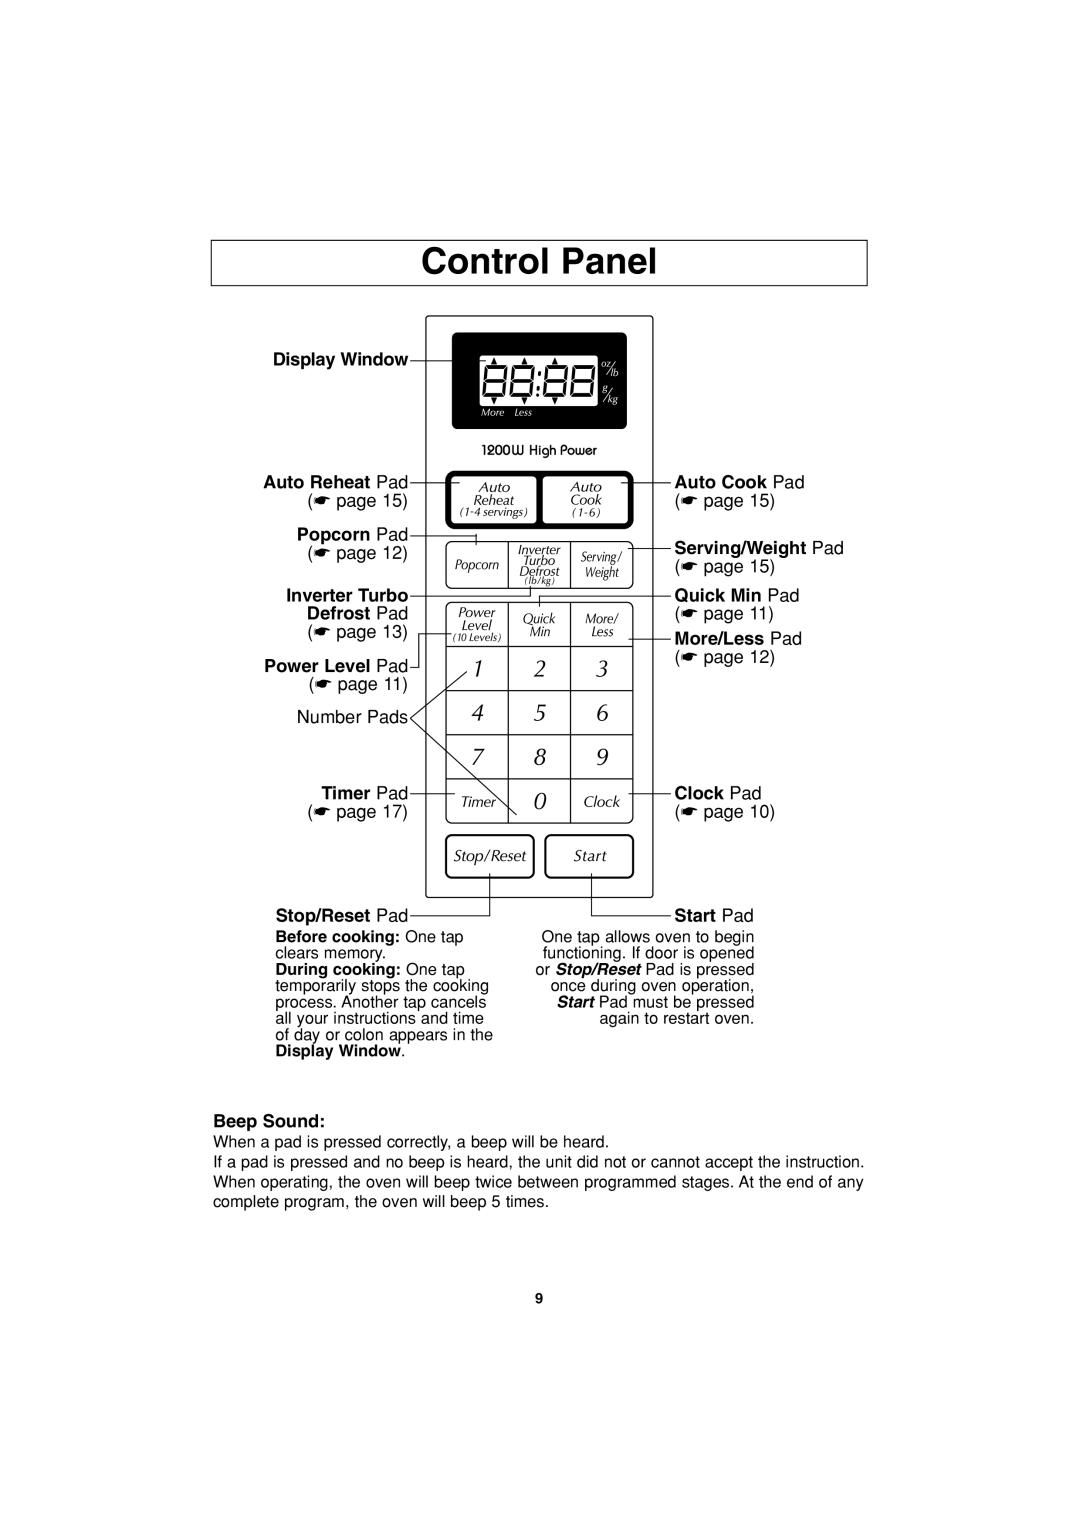 Panasonic NN-S423 Control Panel, Display Window Auto Reheat Pad, Popcorn Pad, Inverter Turbo Defrost Pad, Power Level Pad 